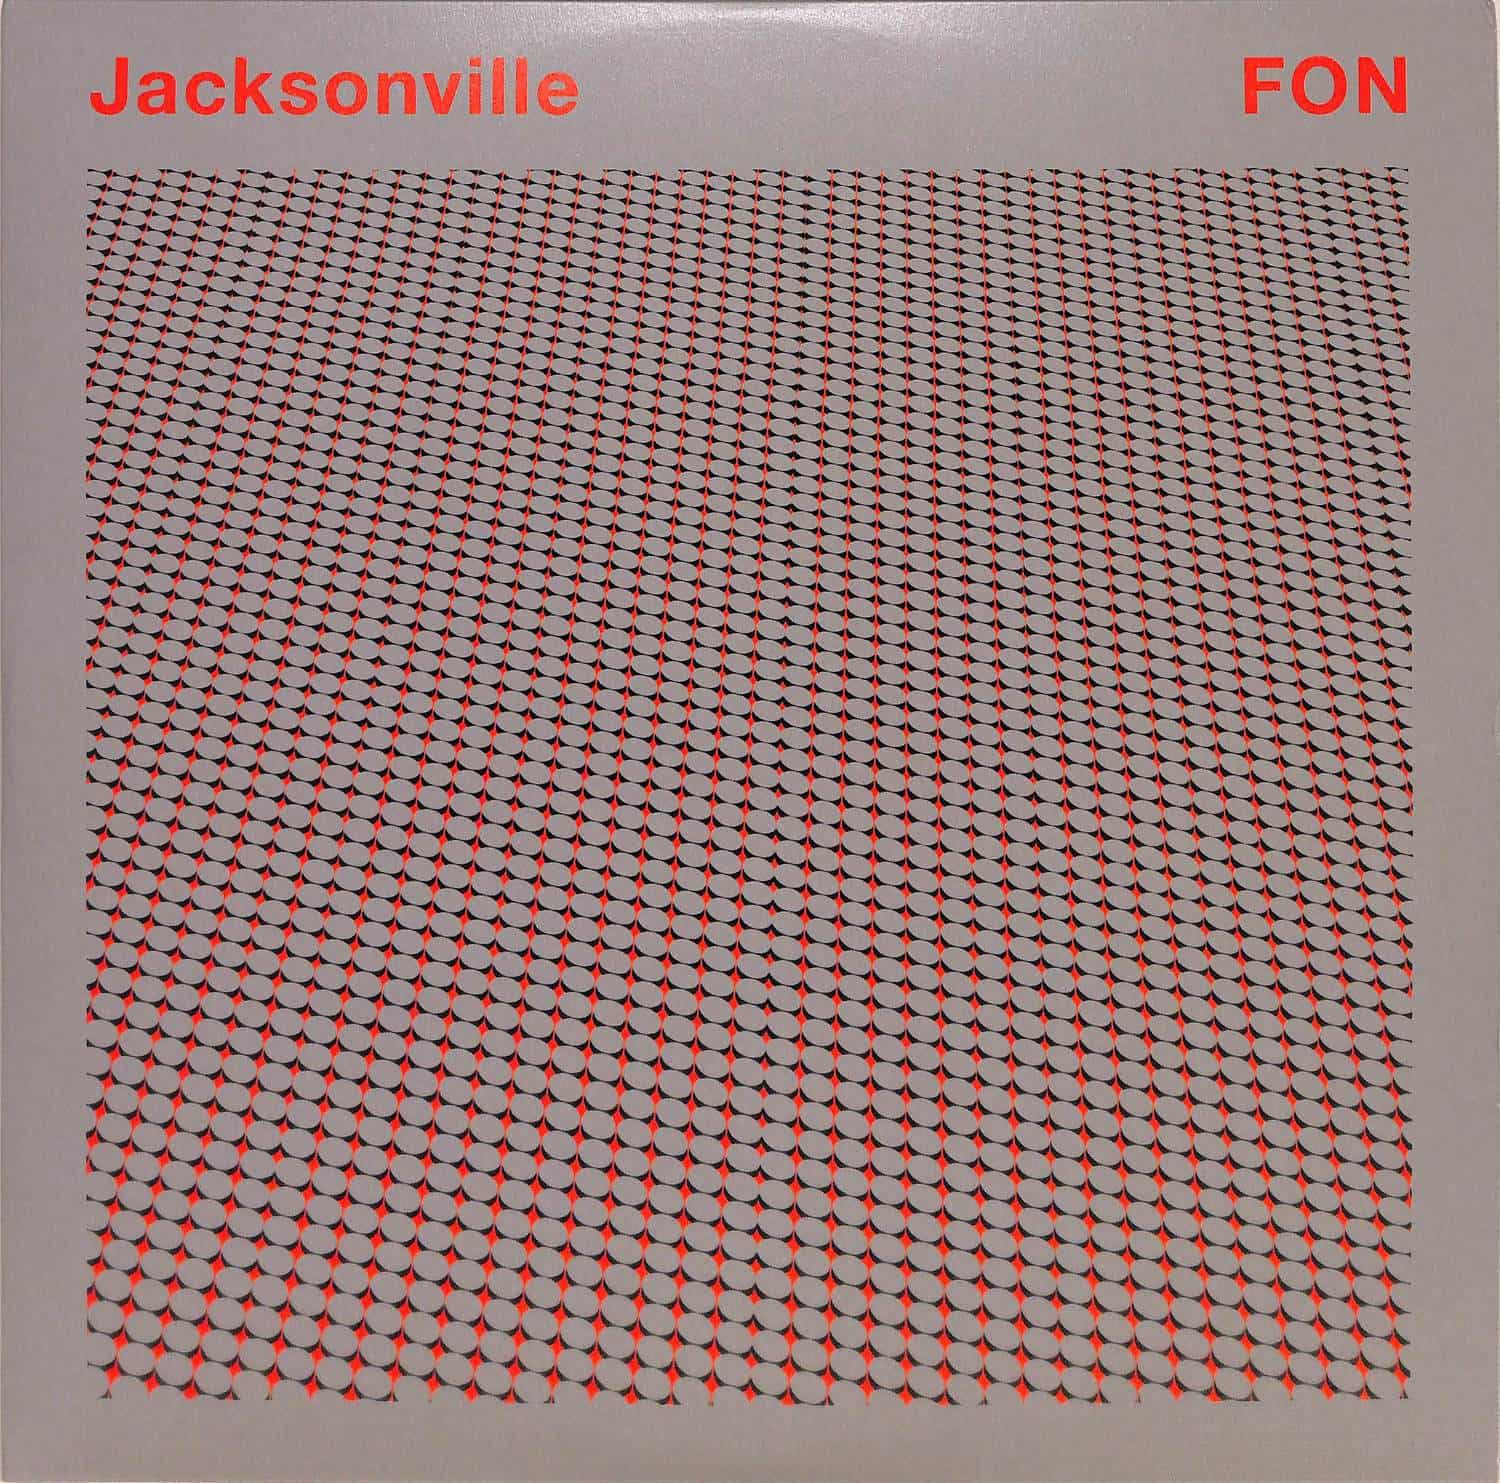 Jacksonville - FON